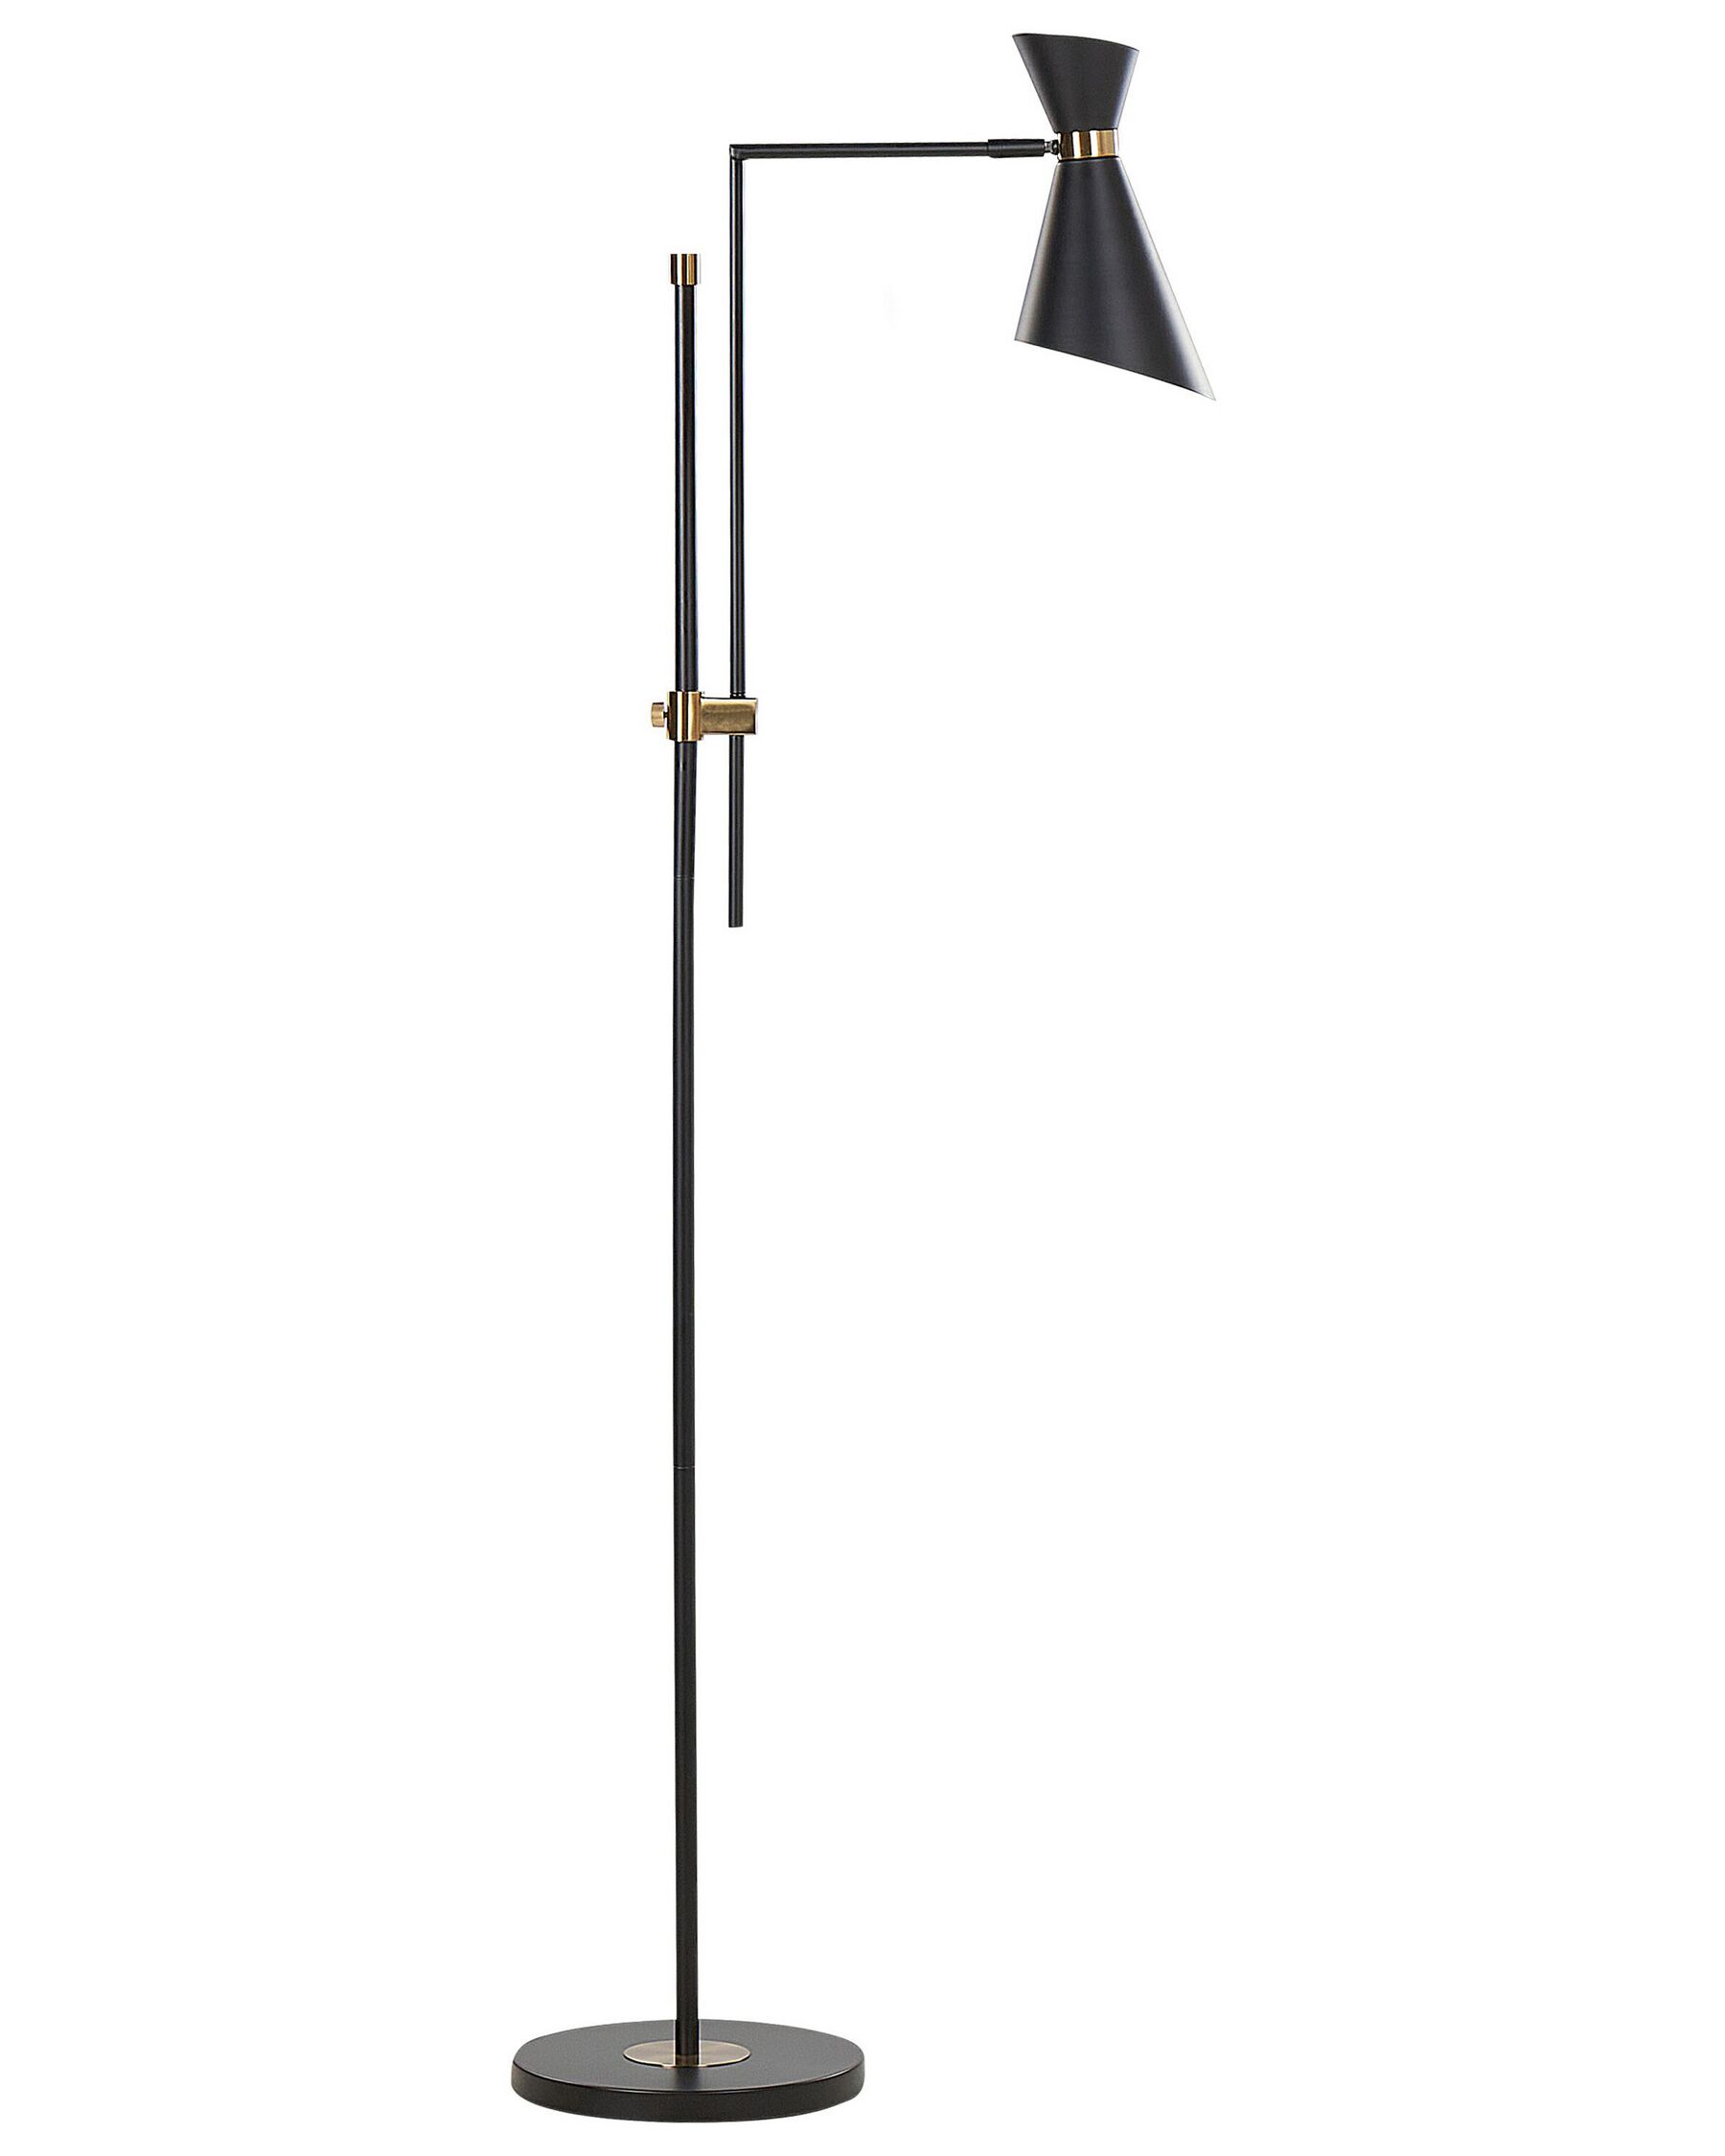 Stehlampe Metall schwarz 155-180 cm MELAWI_879672